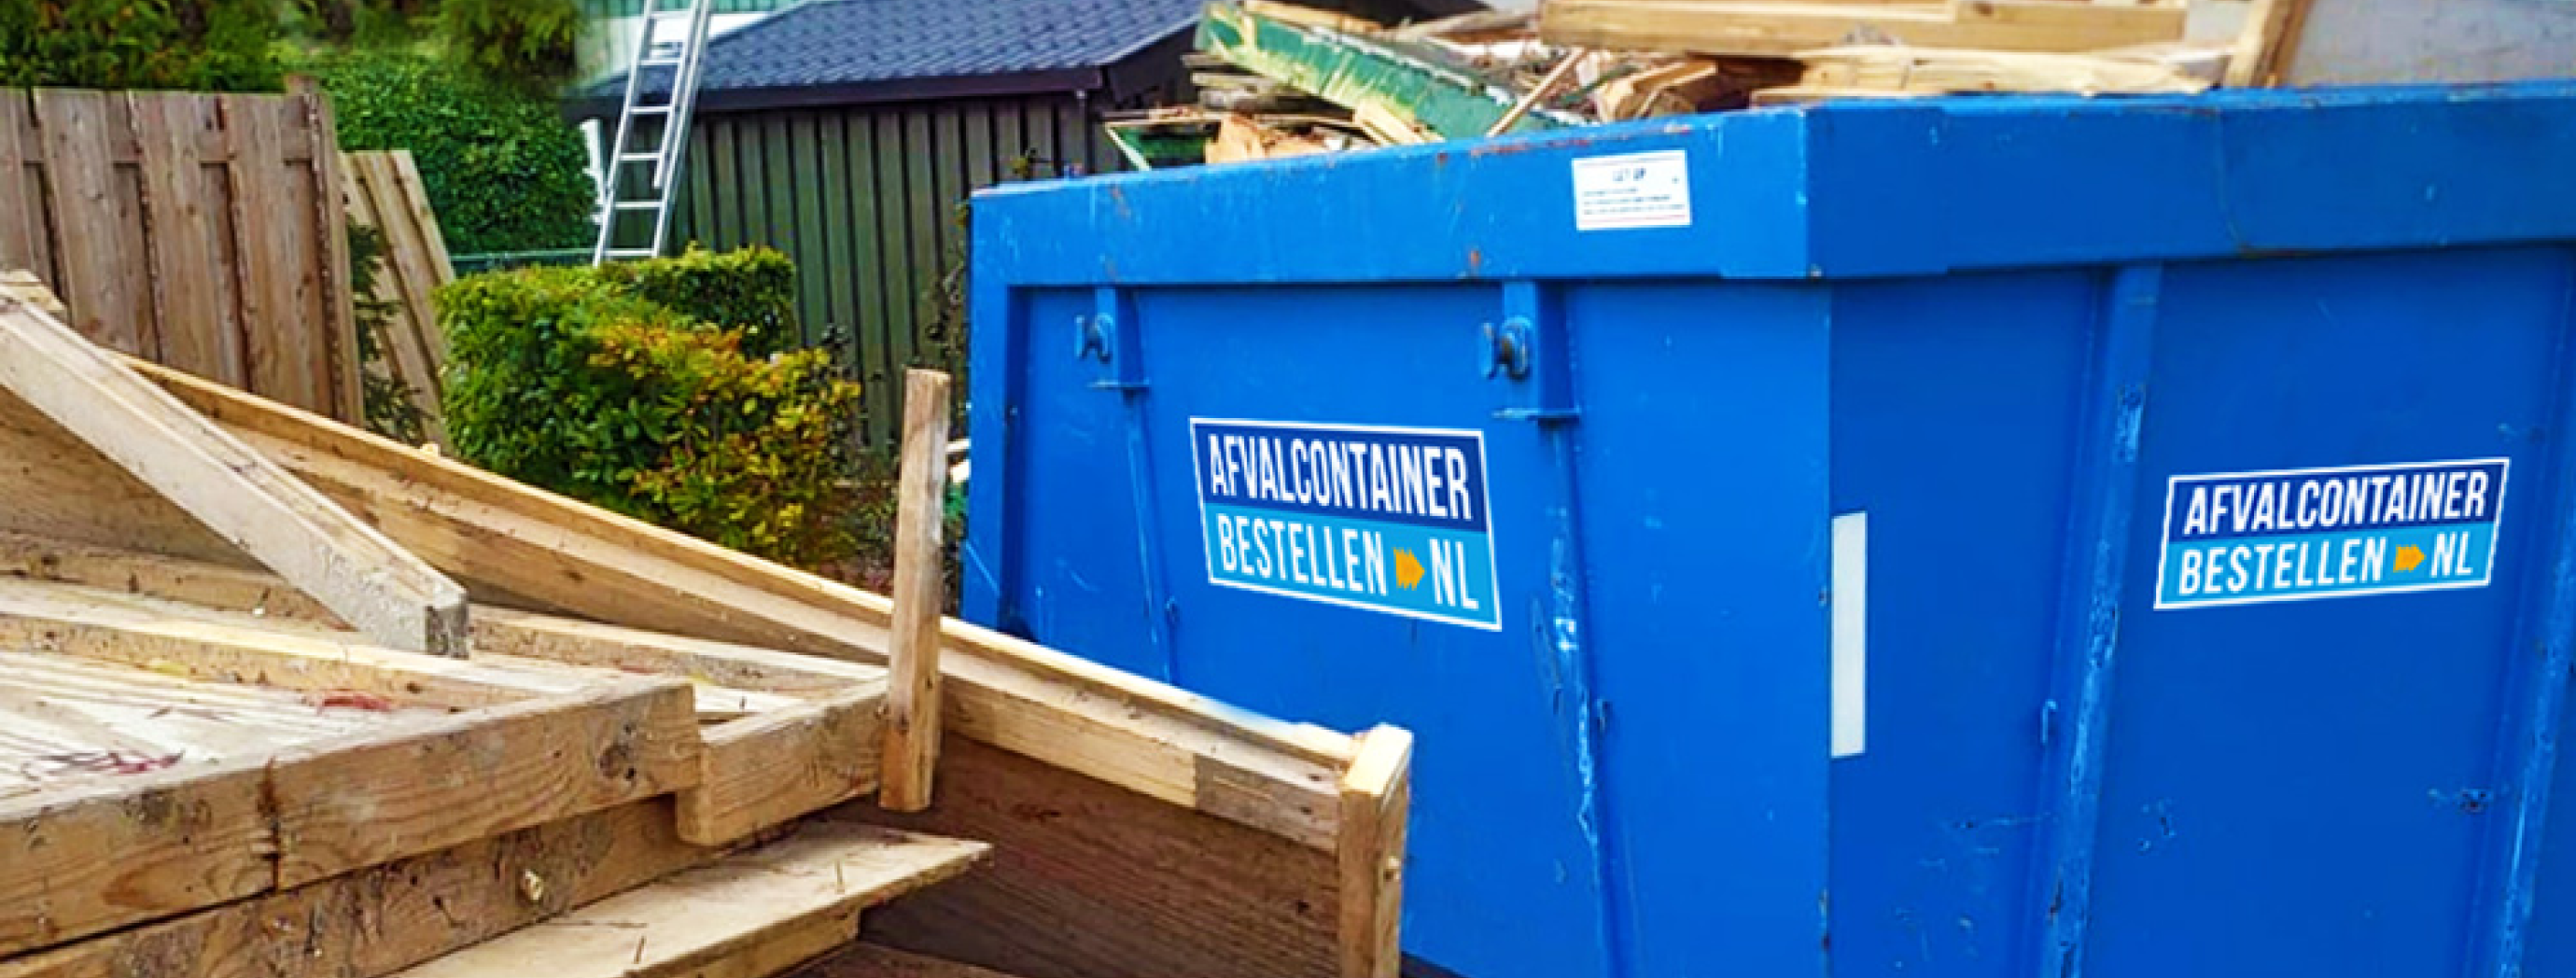 Hout afvoeren | Afvalcontainer bestellen